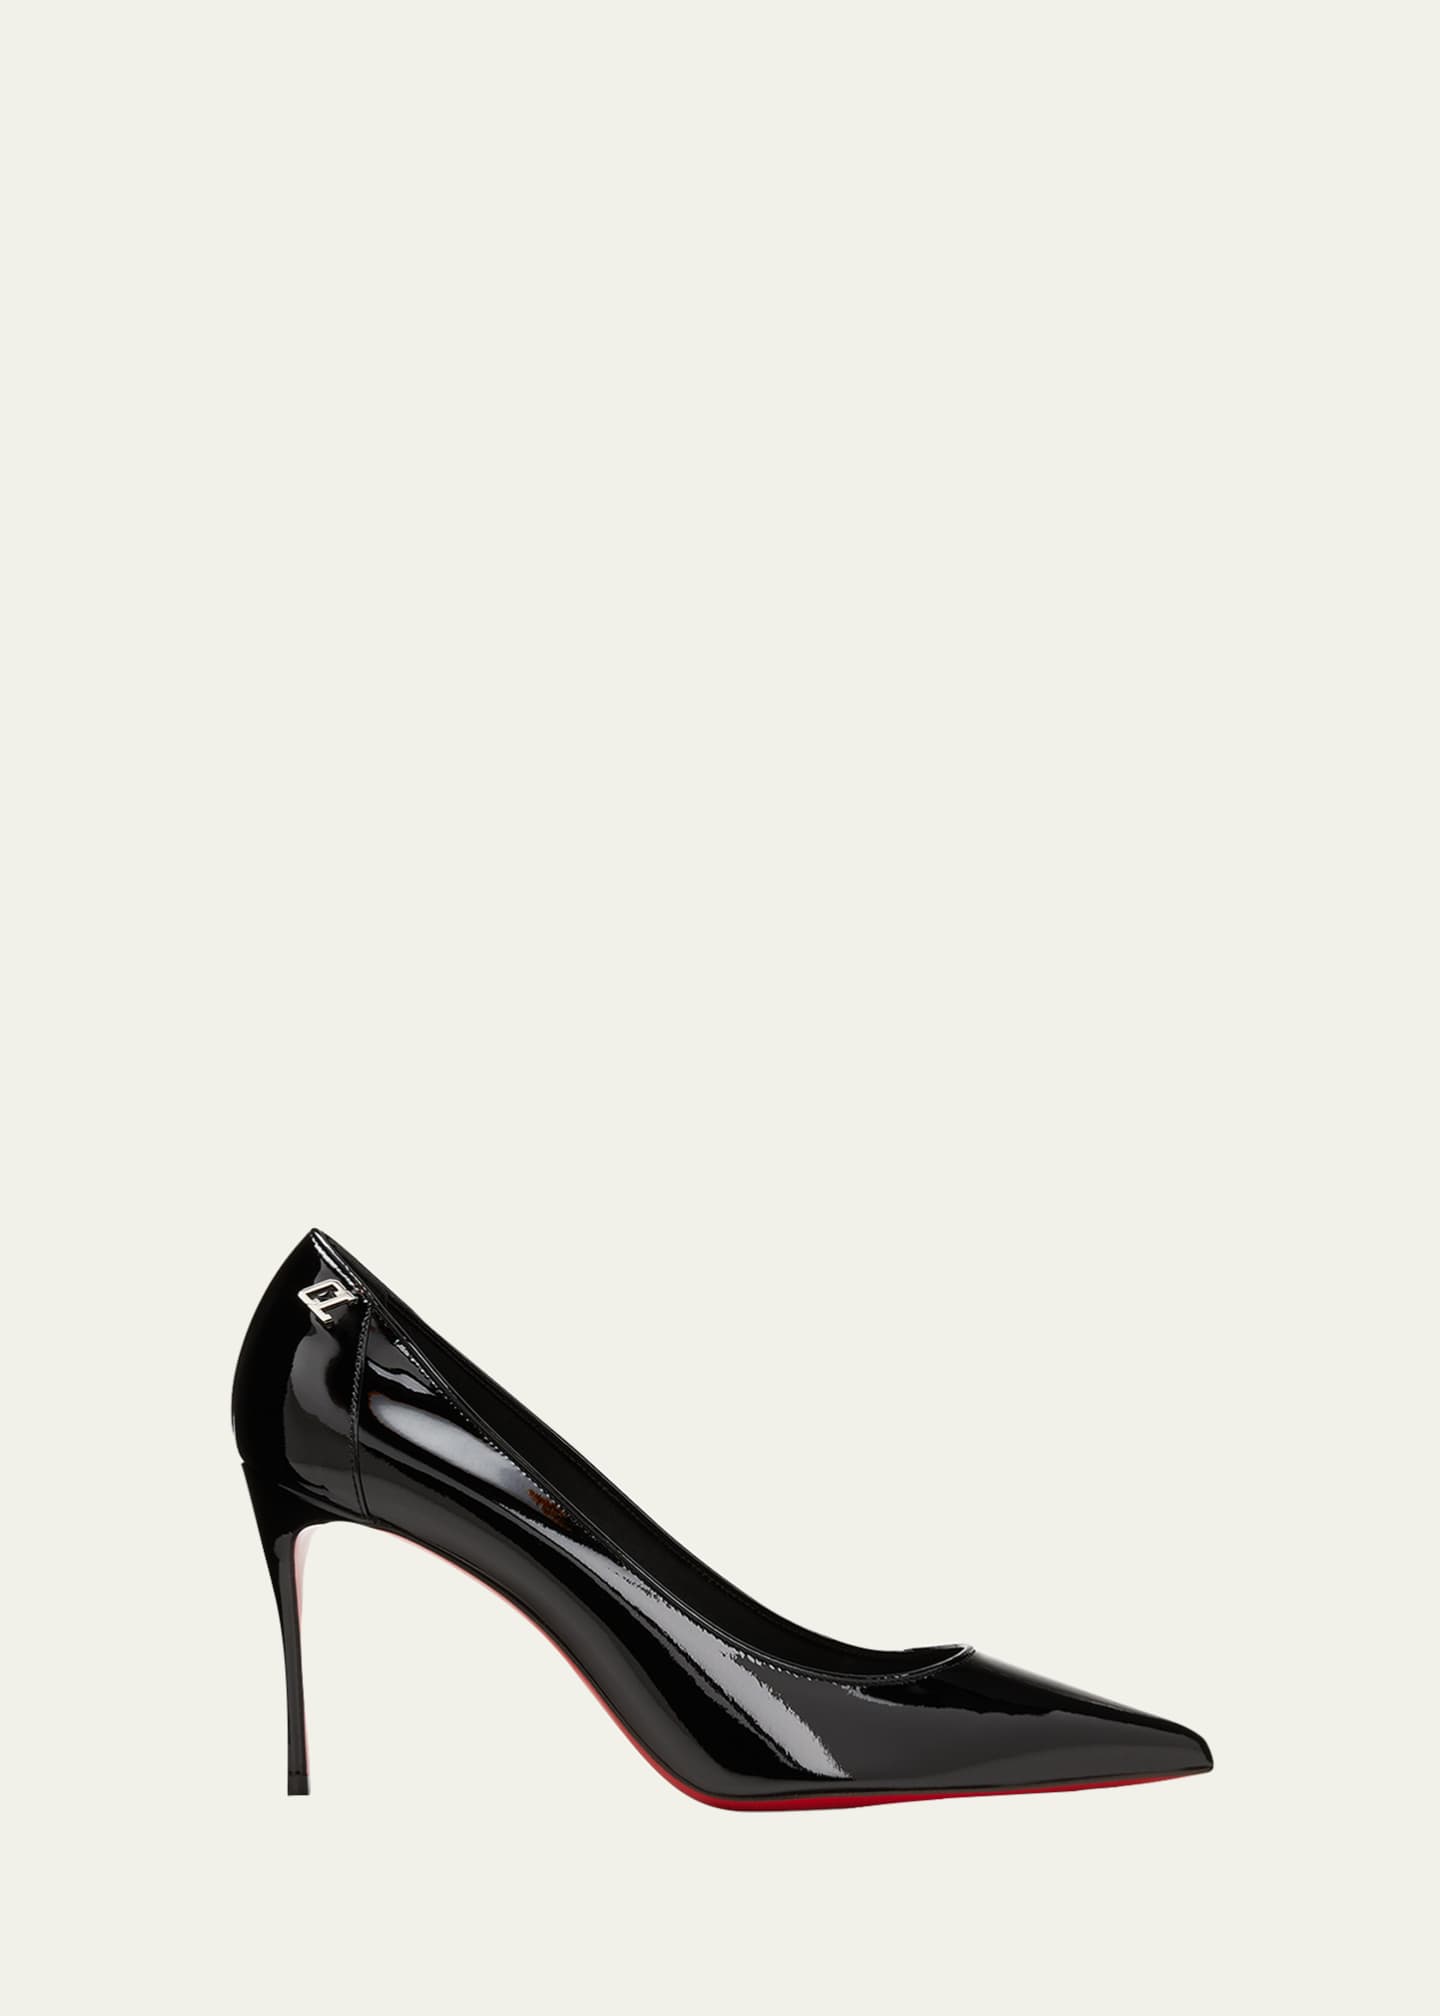 Christian Louboutin Black Patent Leather So Kate Pumps Size 41.5